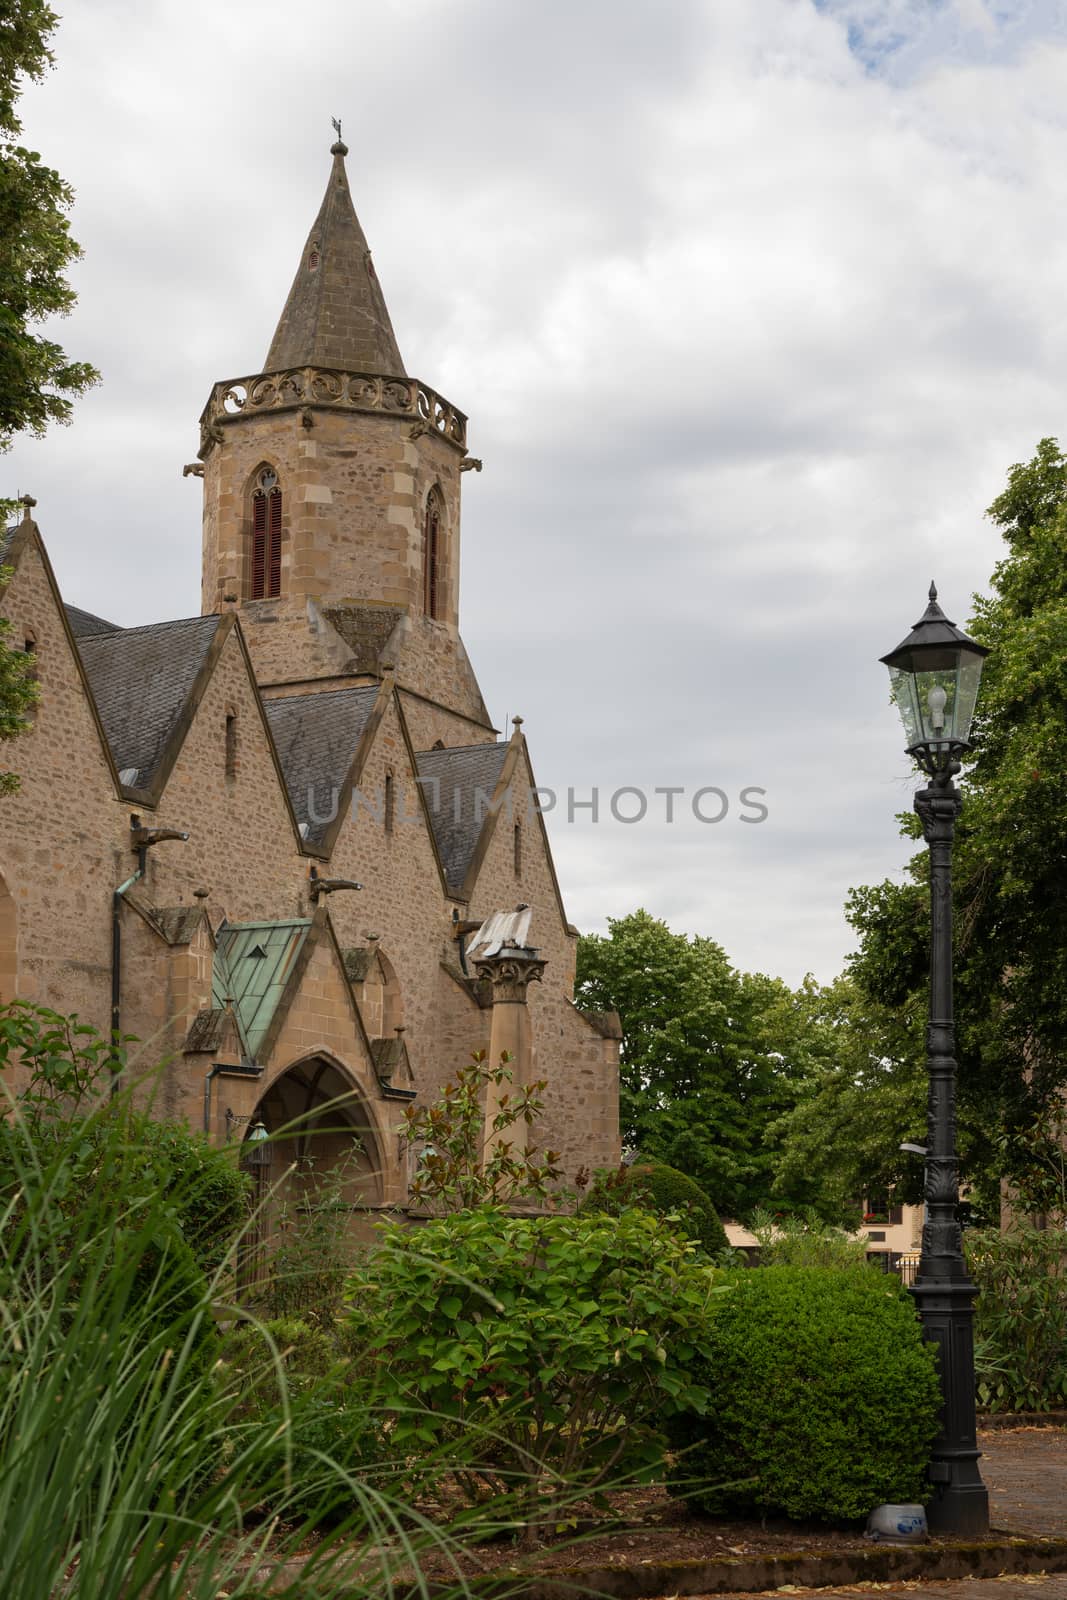 Parish church Saint Matthias of Bad Sobernheim against cloudy sky, Germany